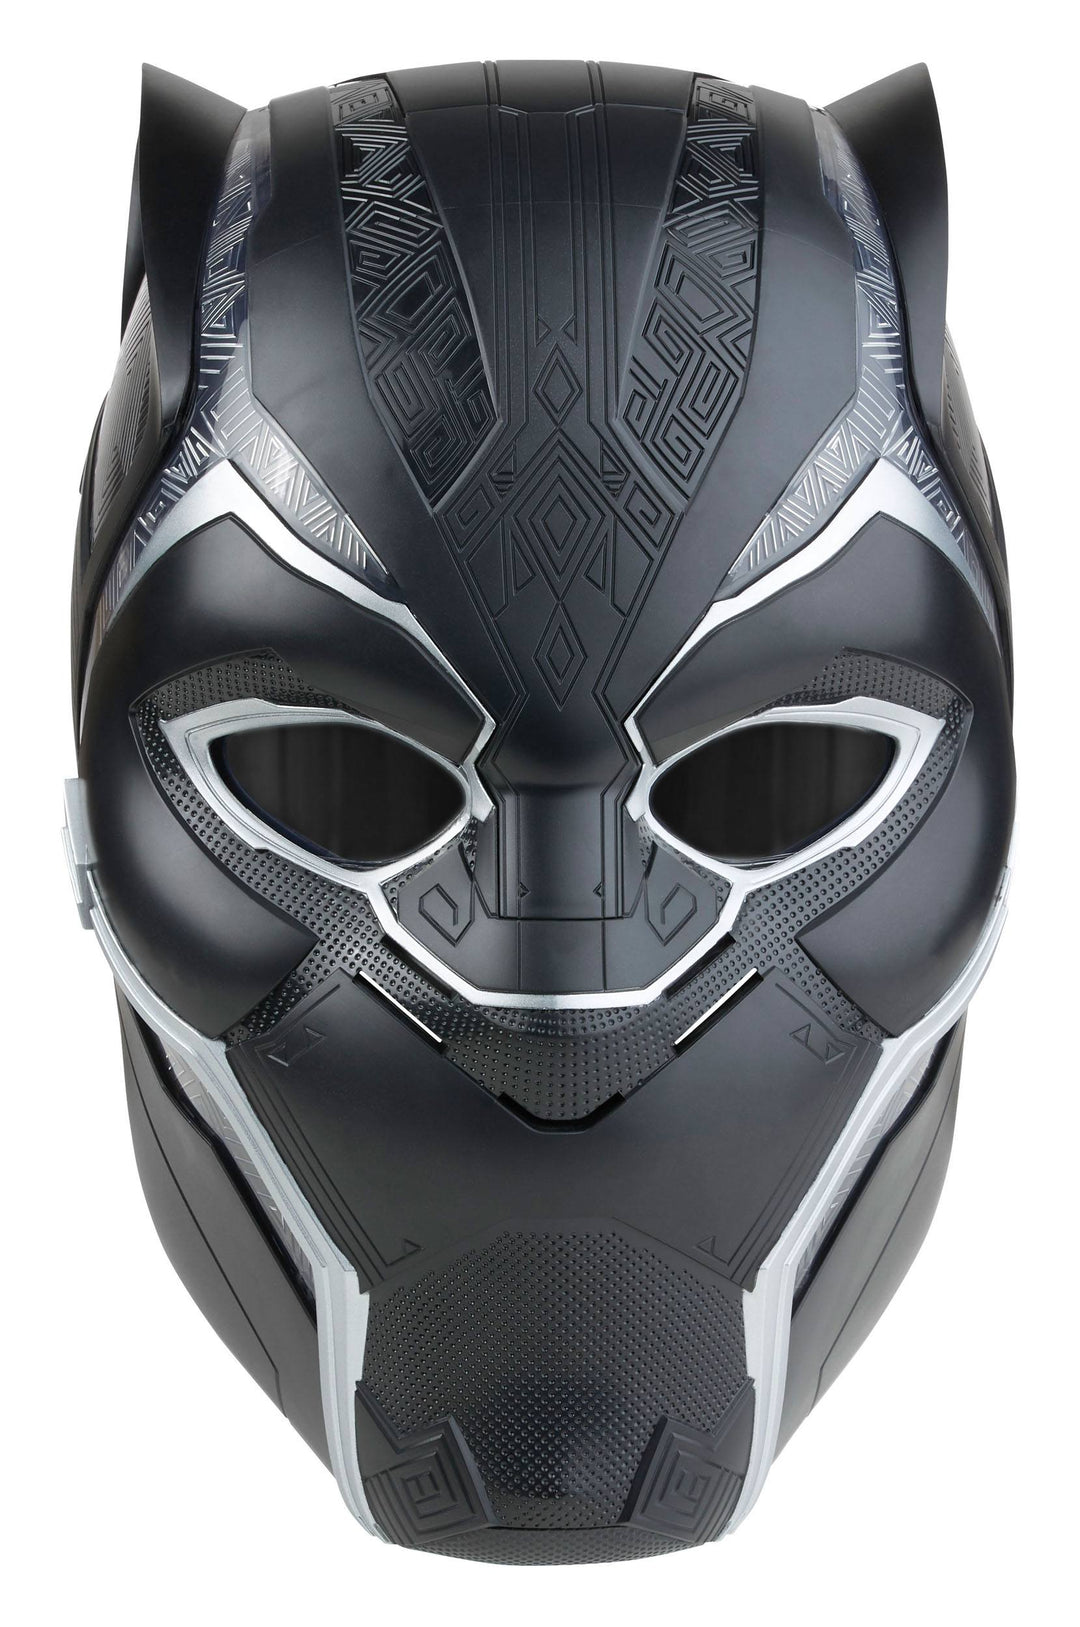 Hasbro Marvel Legends Series Black Panther Electronic Helmet